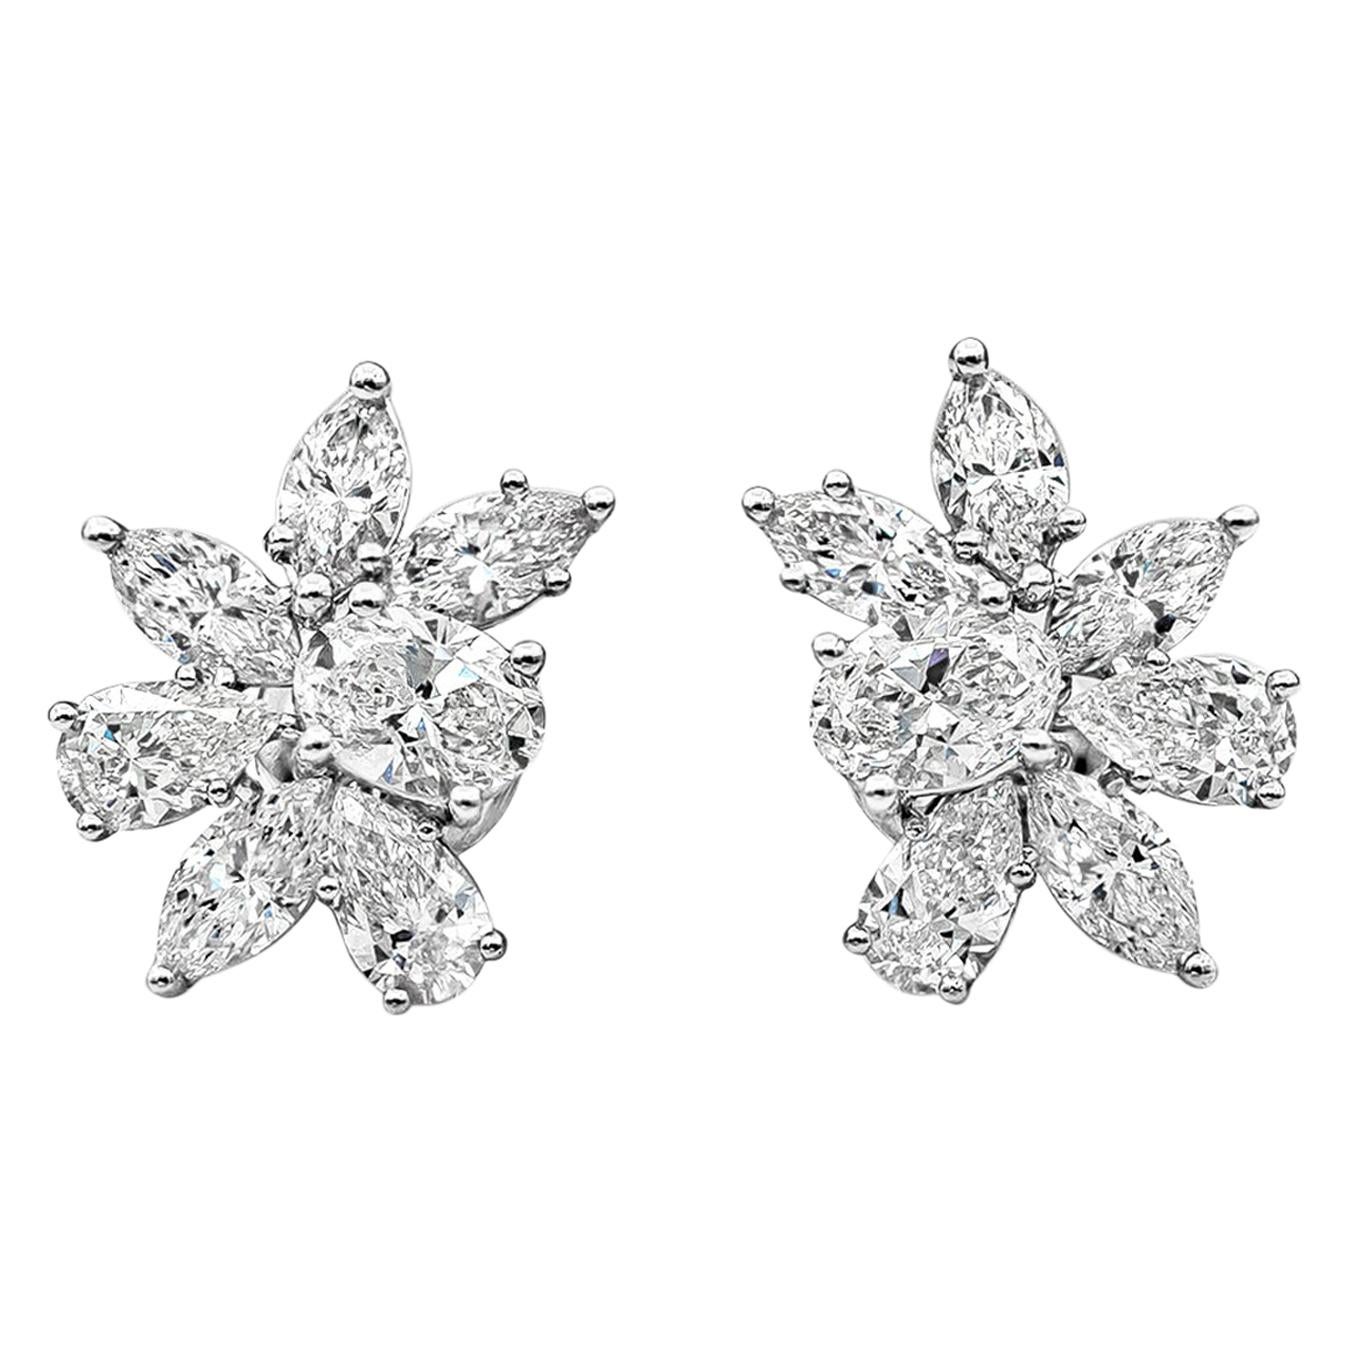 Roman Malakov 3.80 Carat Pear and Oval Cut Diamonds Cluster Stud Earrings For Sale